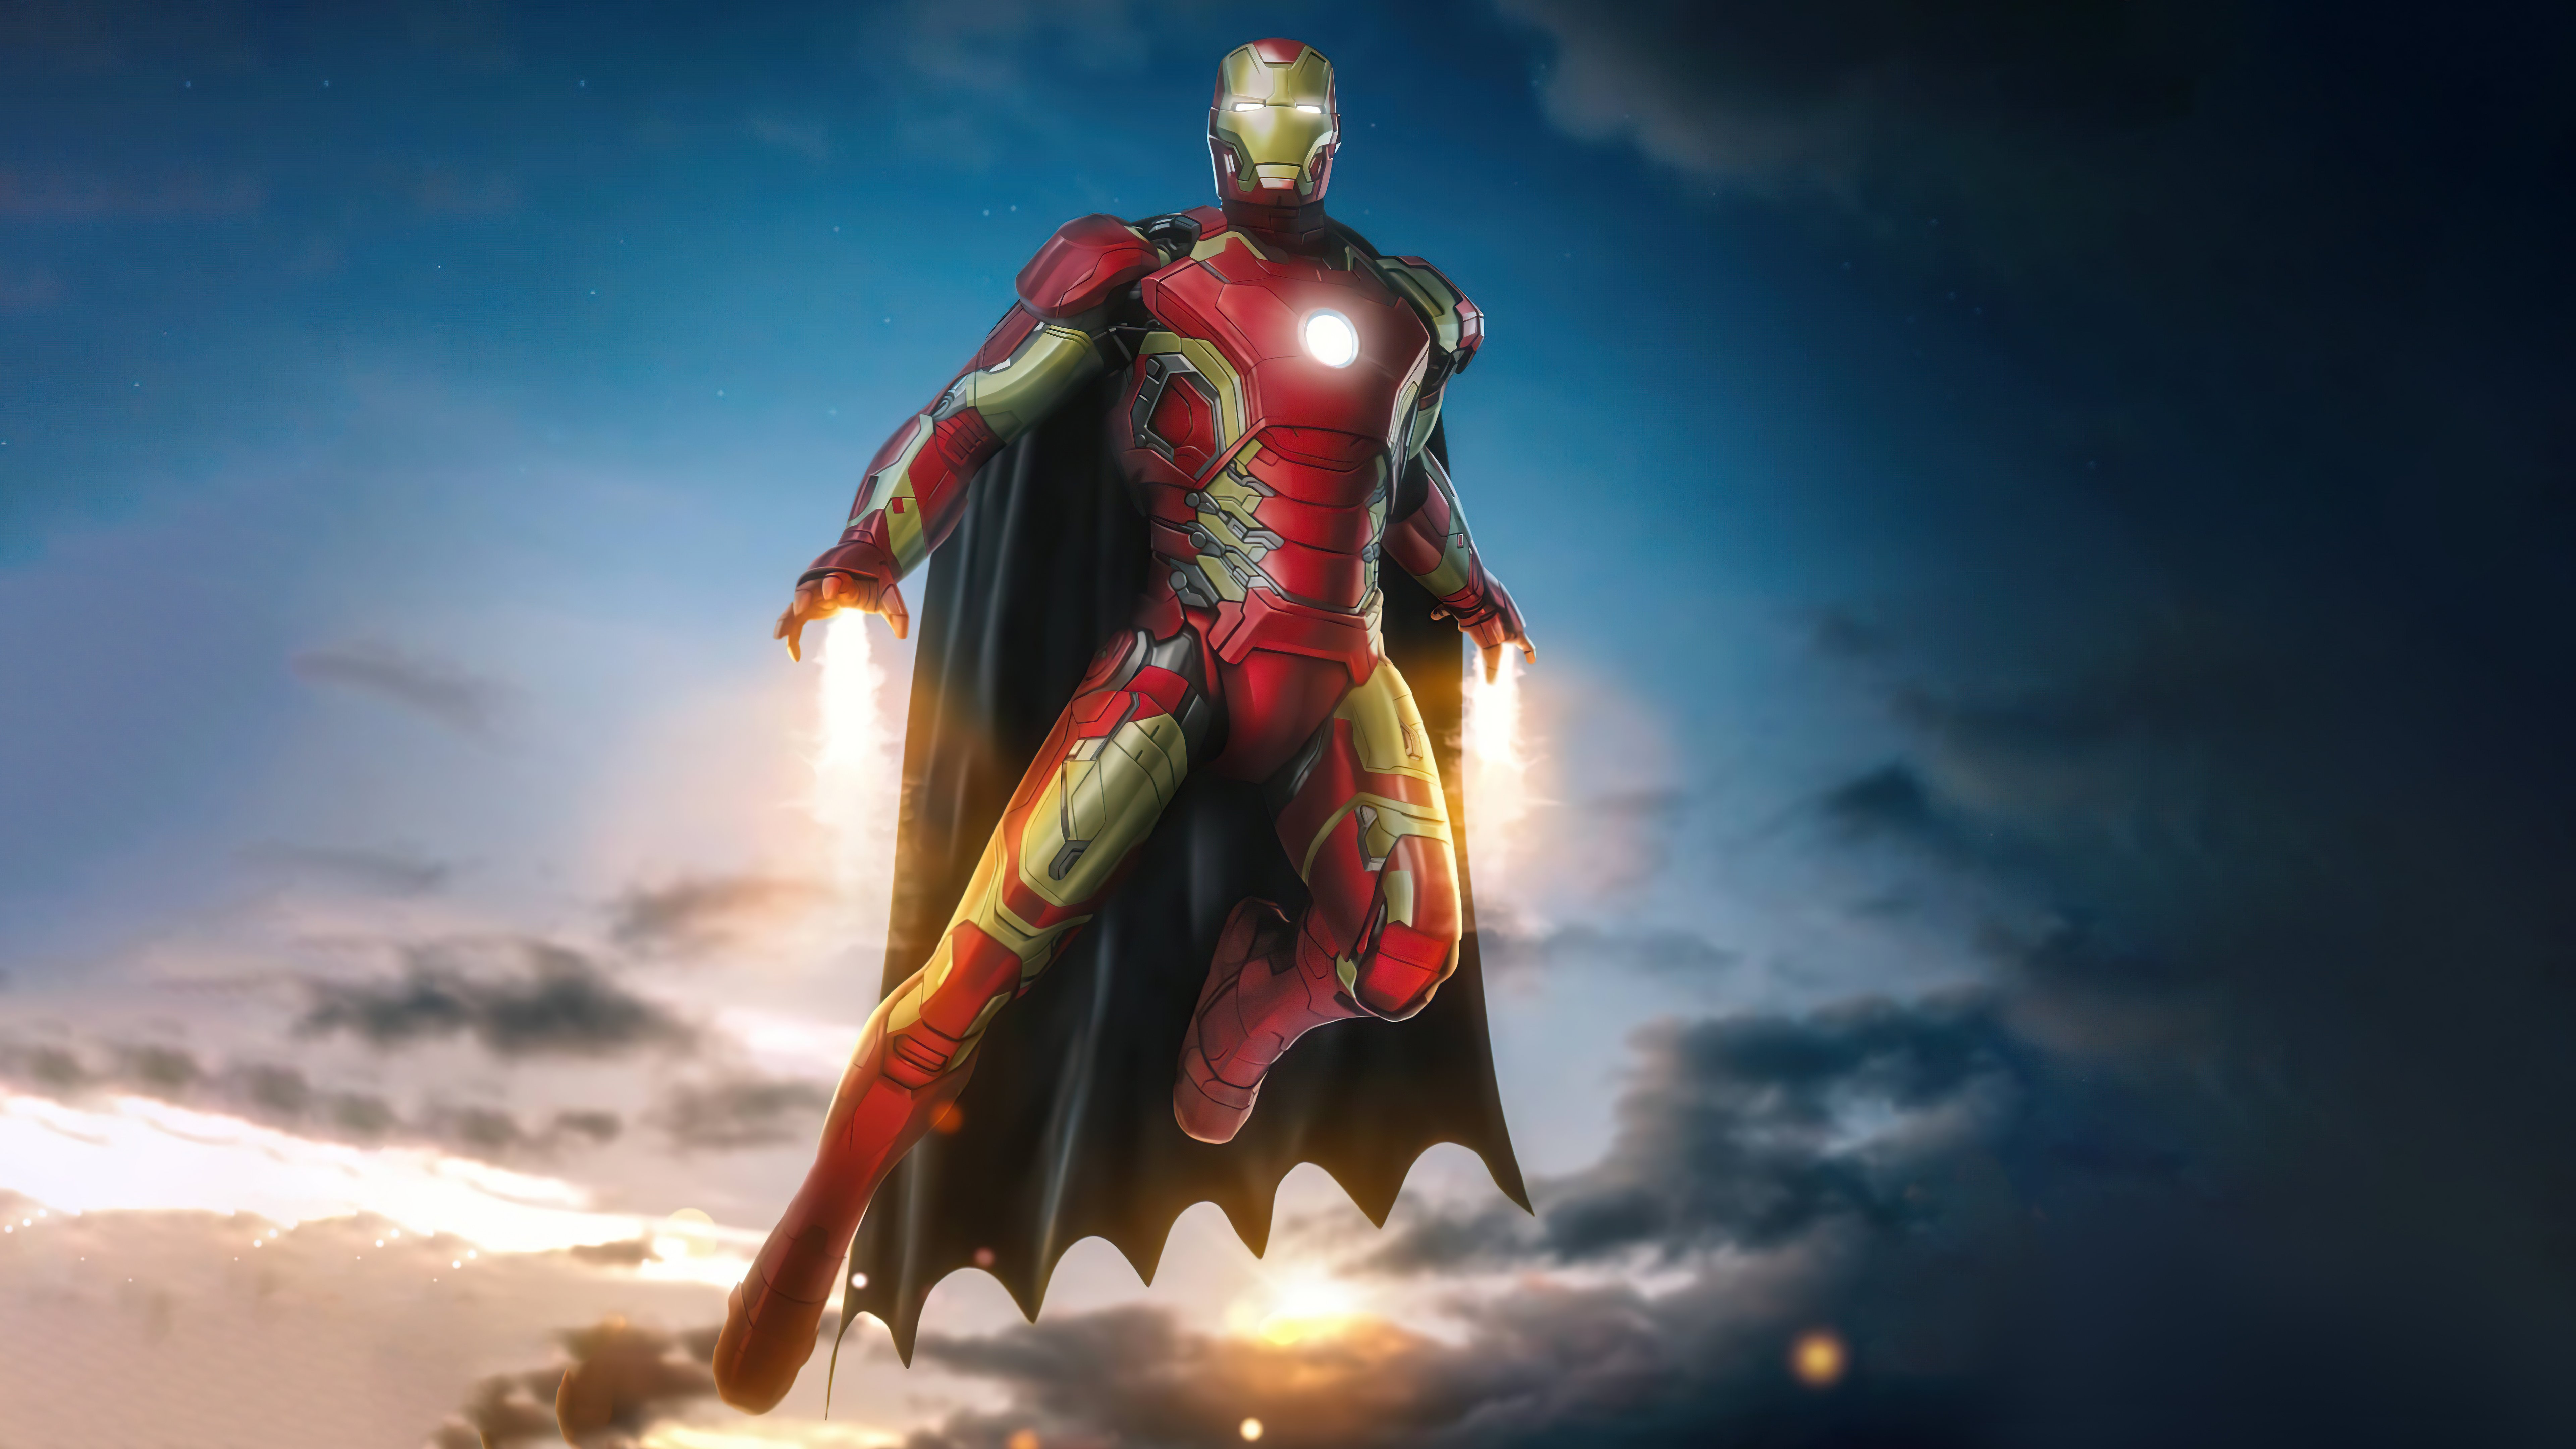 Wallpaper Iron Man with Batman cape